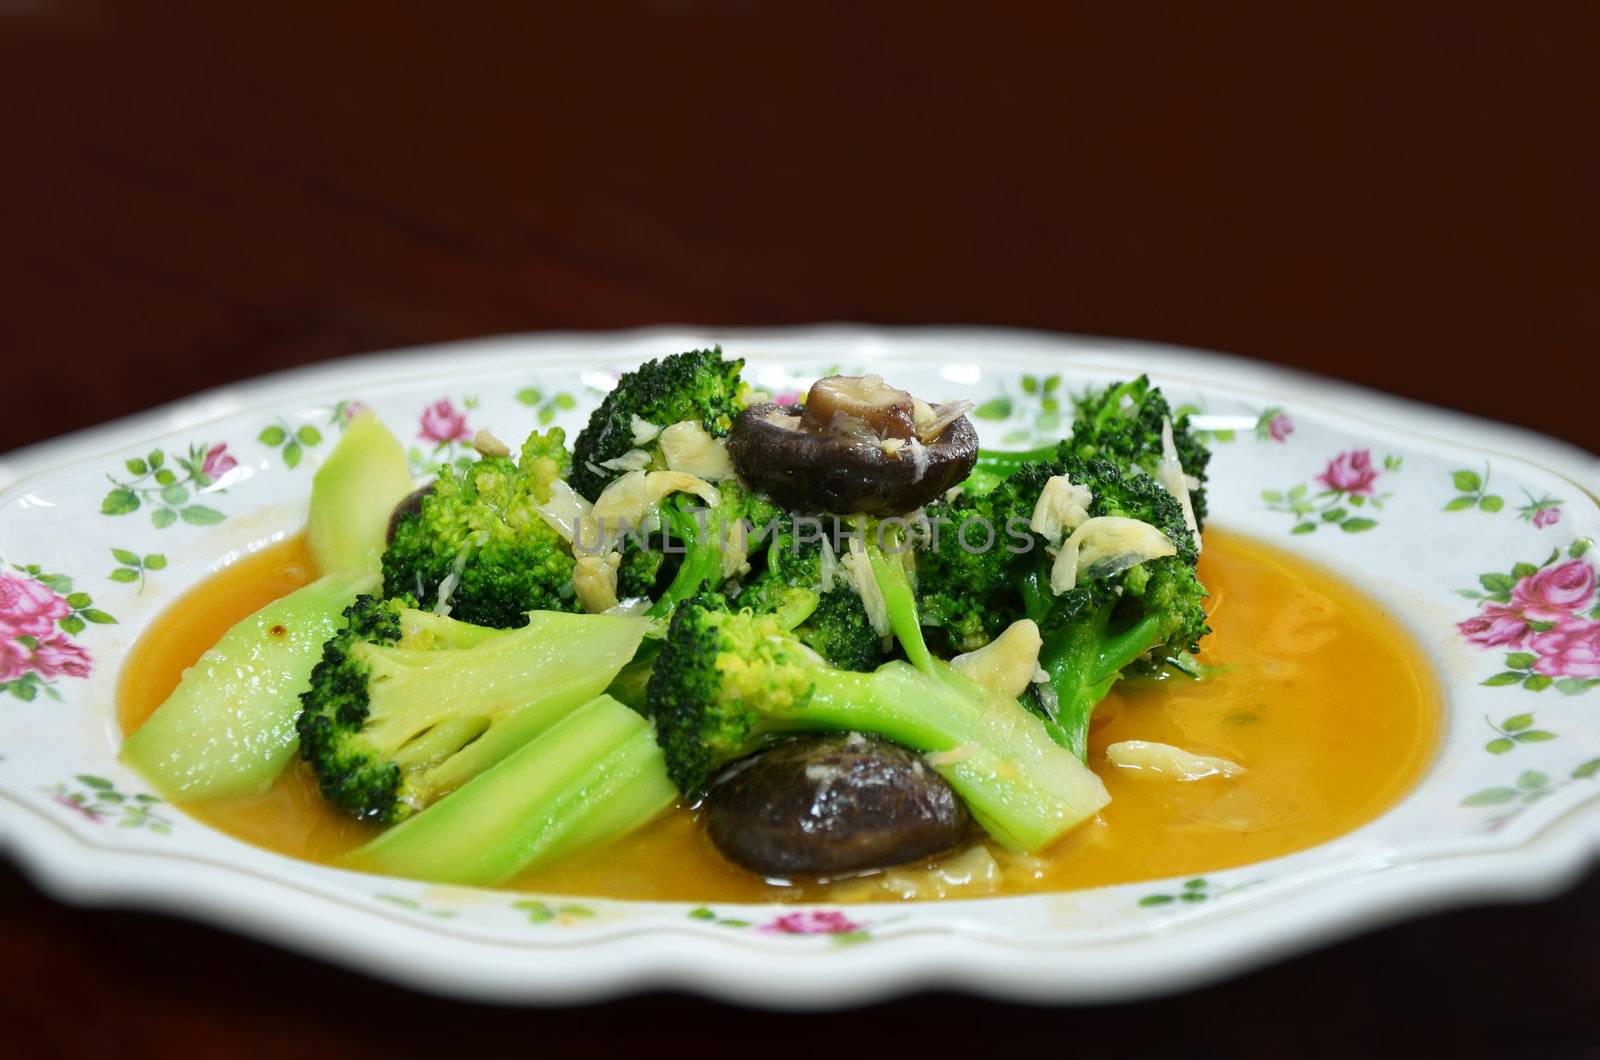 stir fry broccoli with shiitake mushroom